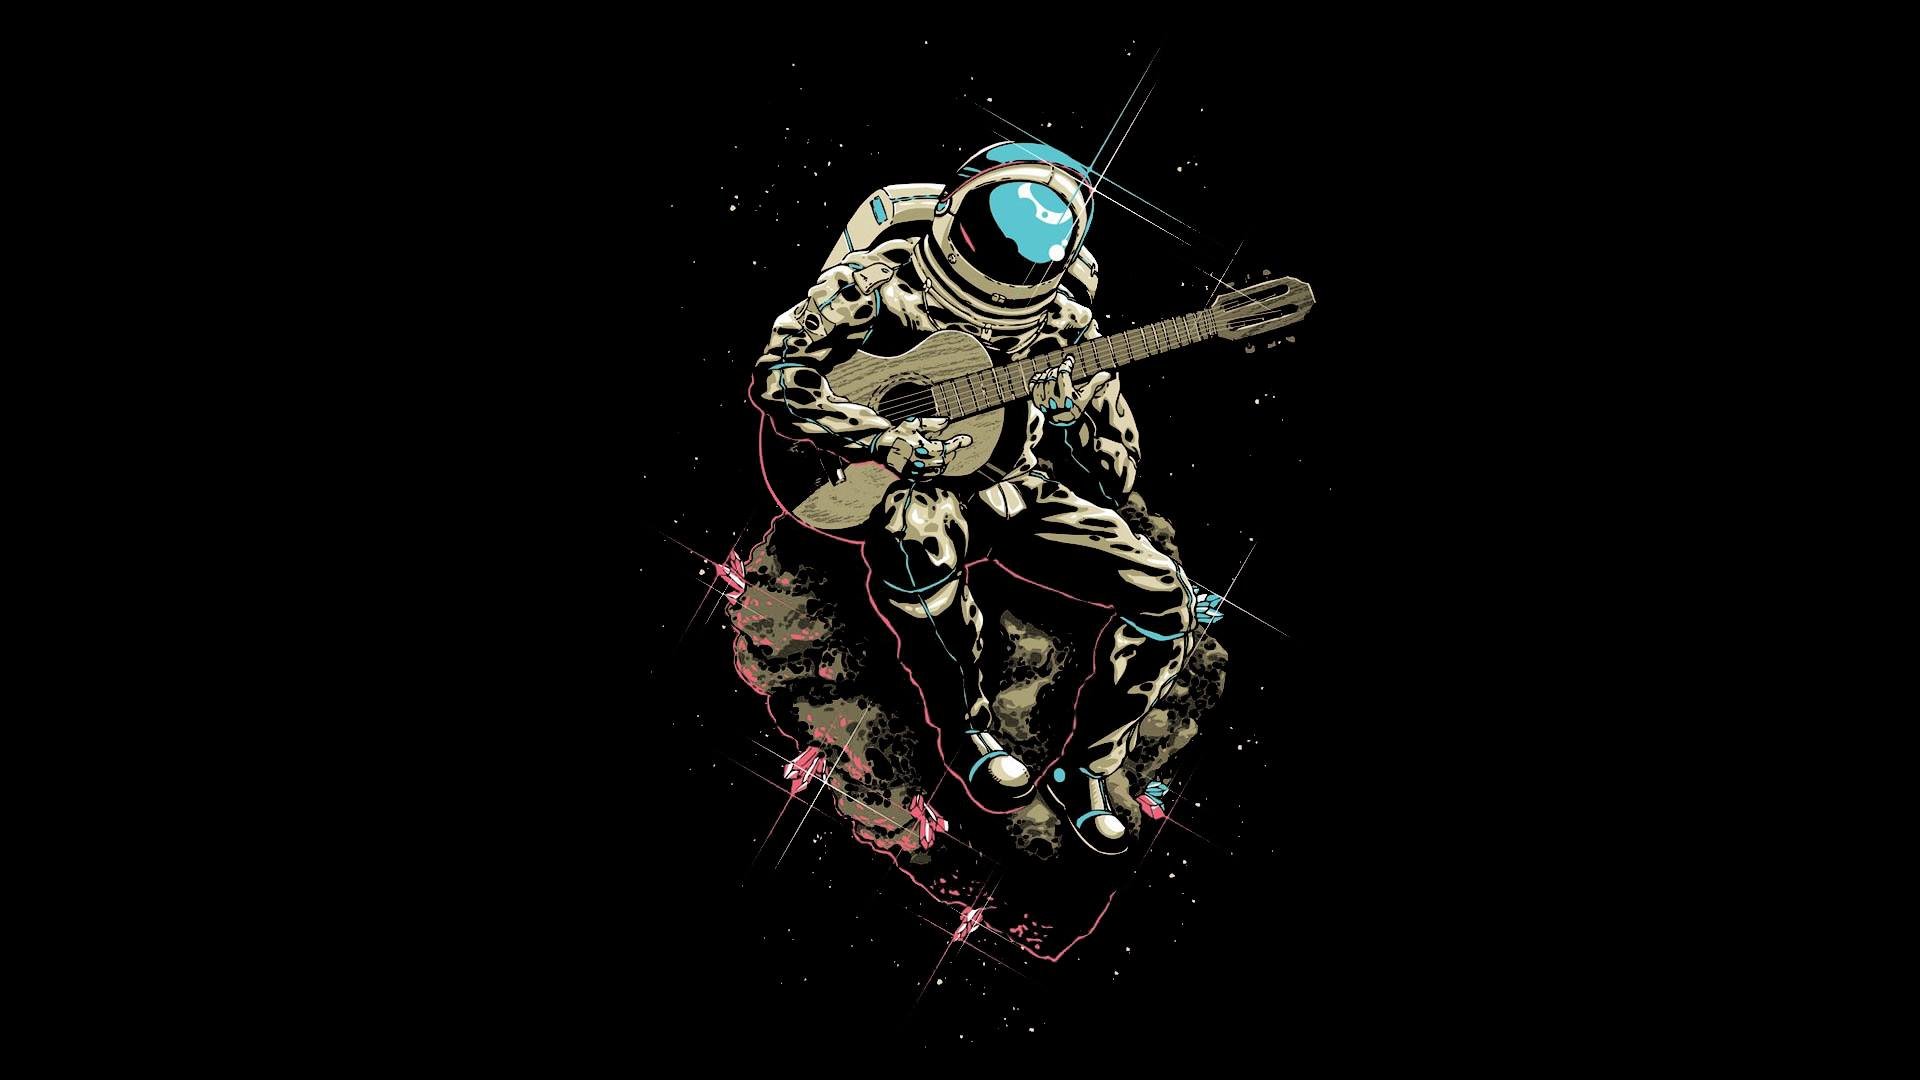 guitar wallpaper,graphic design,darkness,illustration,astronaut,animation